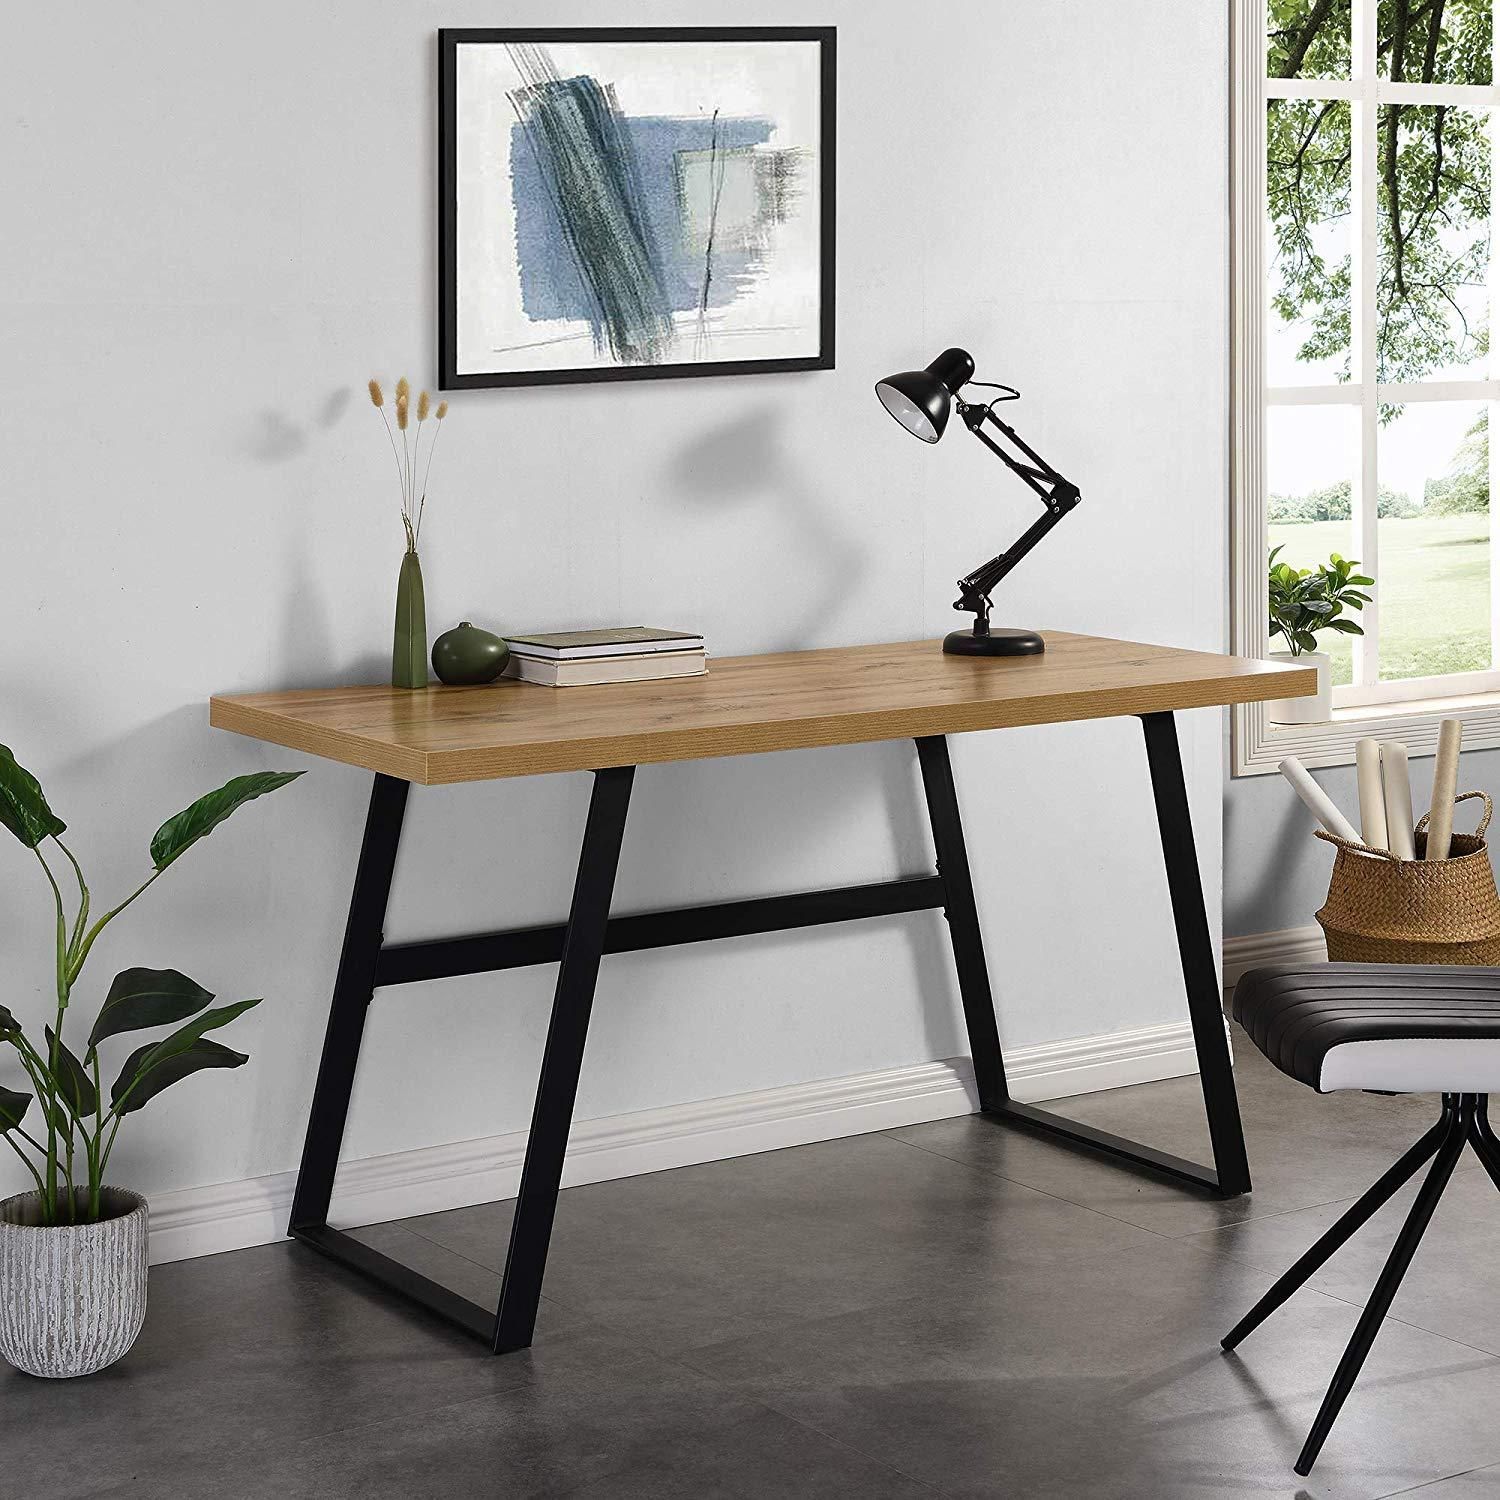 Kloten Oak Effect Desk With Black Metal Legs | Furniture, Home Office Within Walnut Wood And Black Metal Office Desks (View 14 of 15)